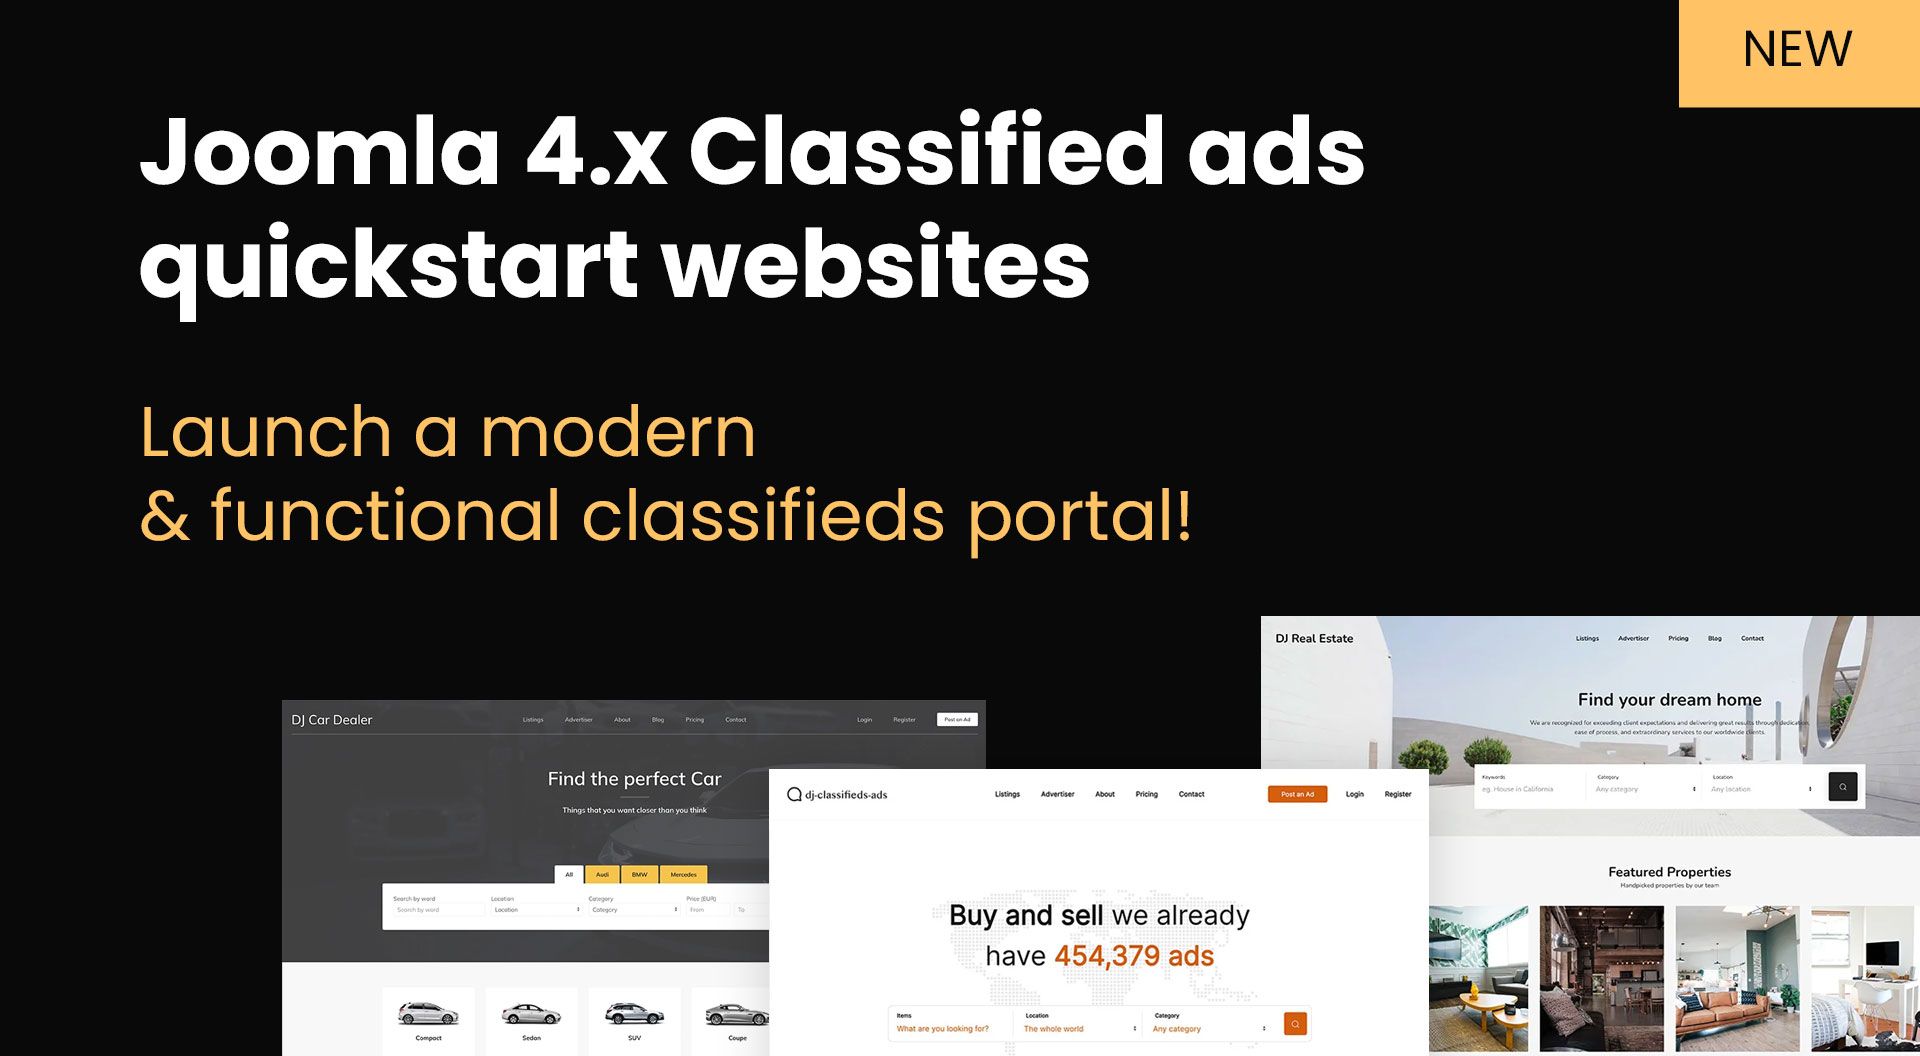 NEW - Joomla 4.x classified ads quickstart websites